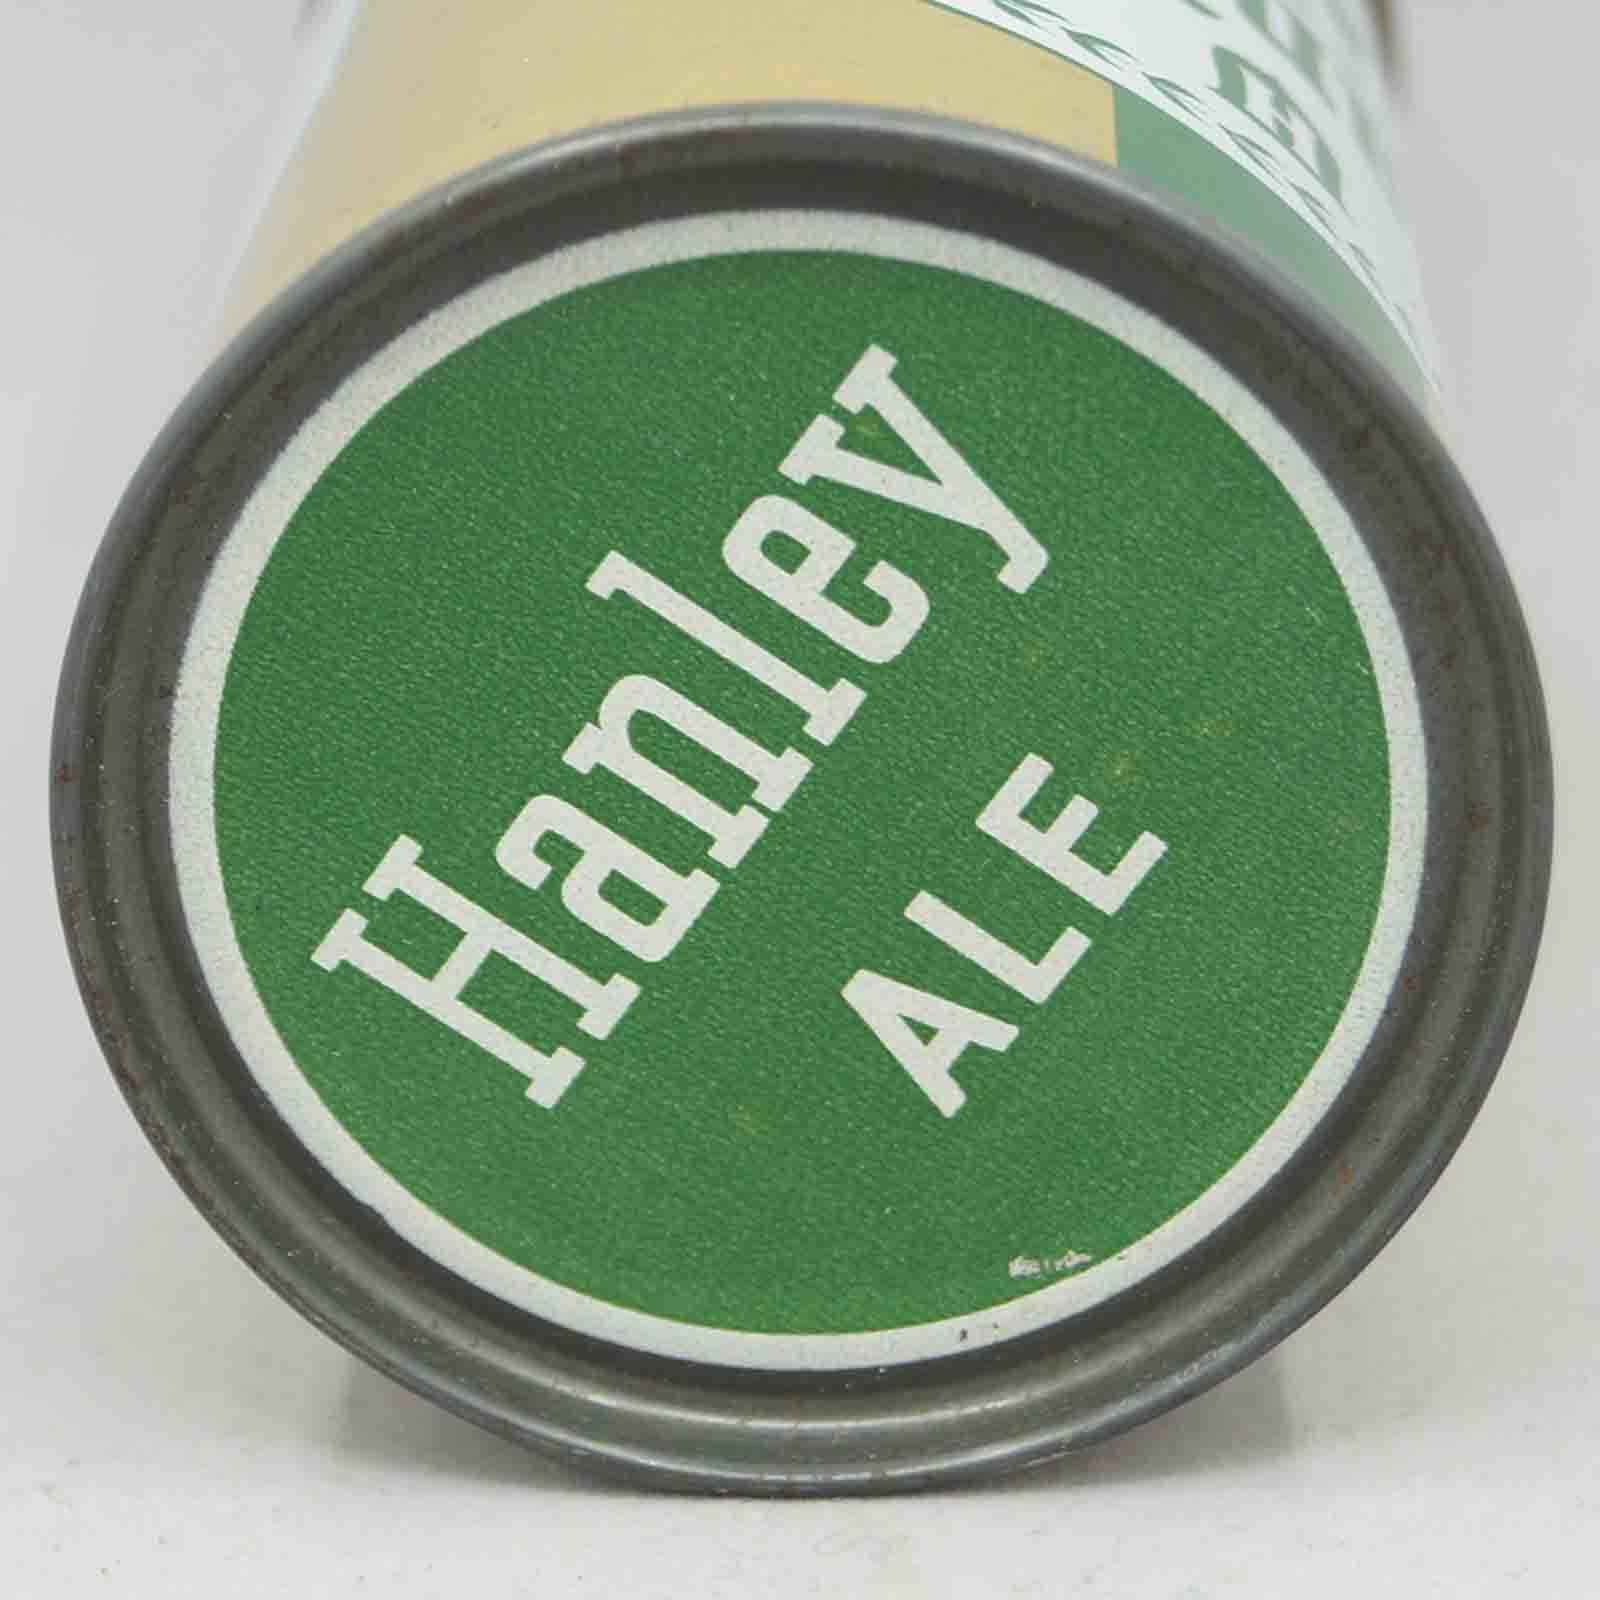 hanley ale 80-4 flat top beer can 5